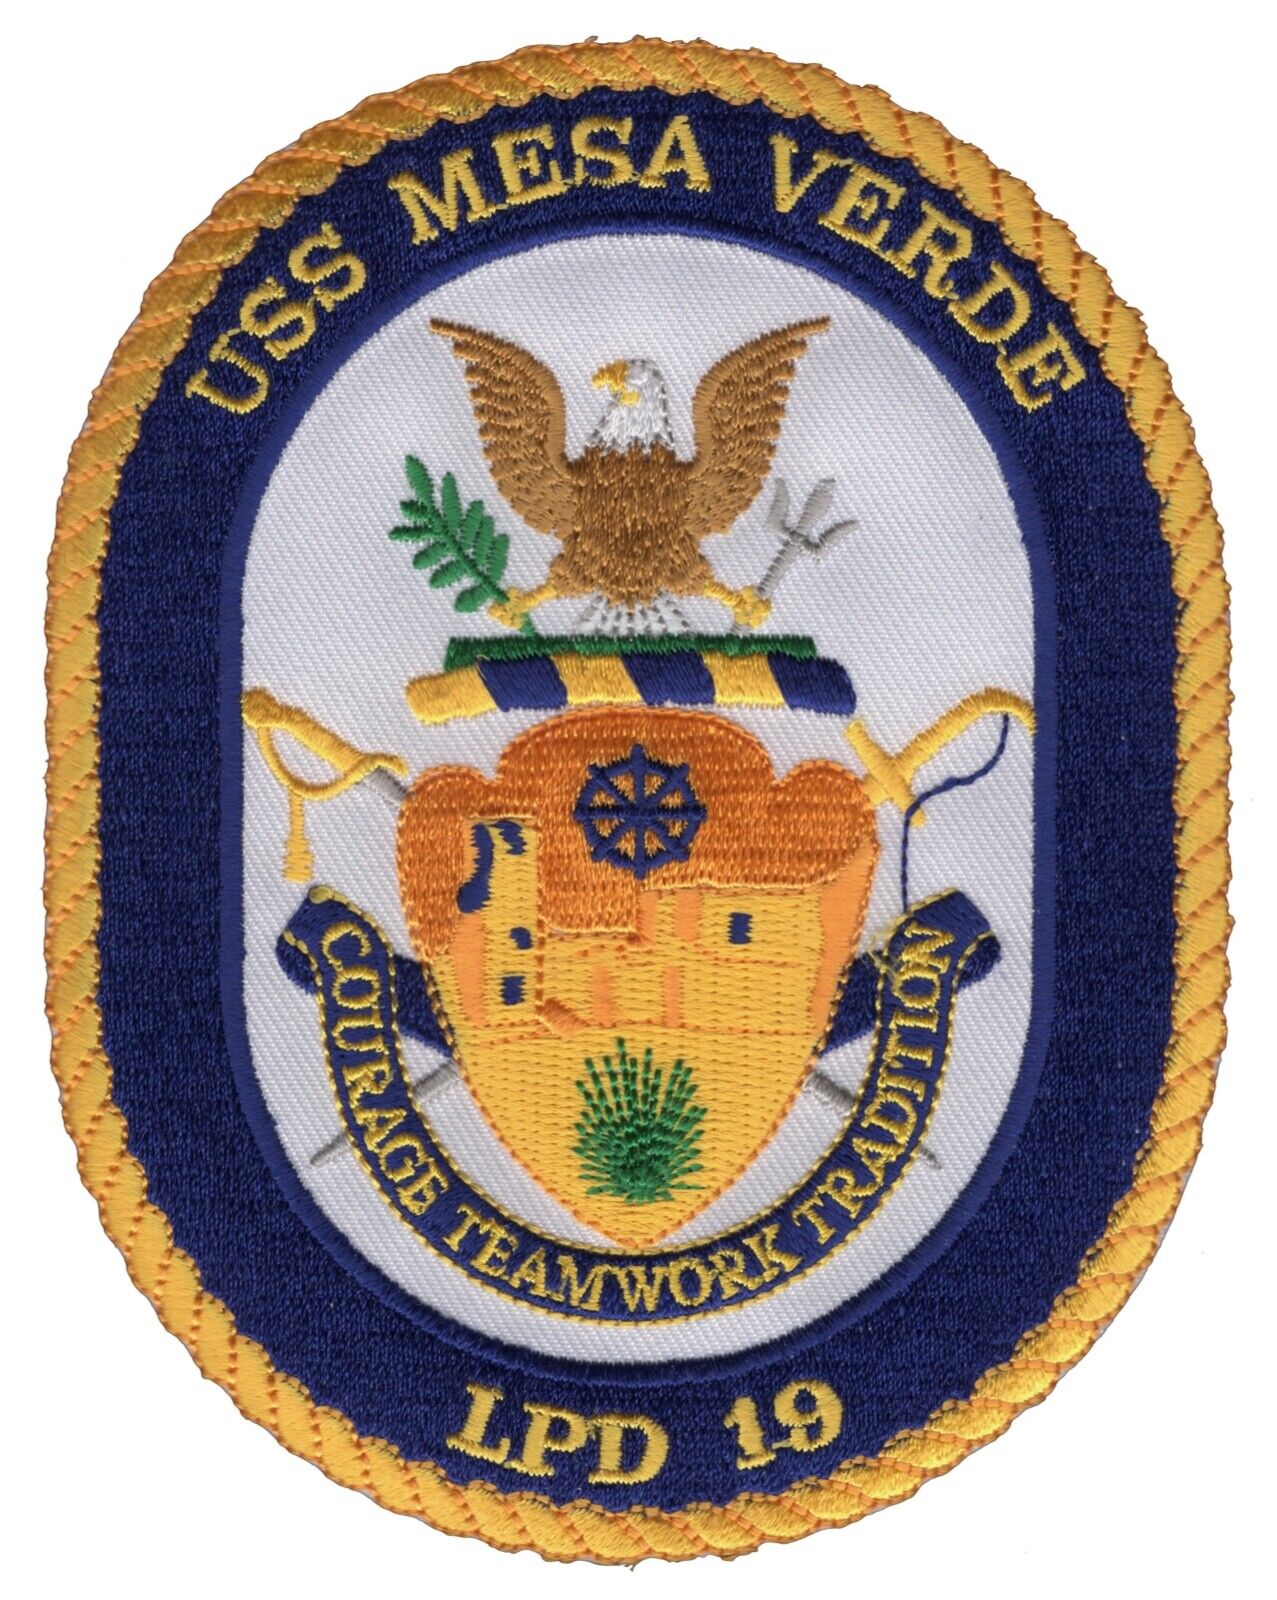 LPD-19 USS Mesa Verde Patch